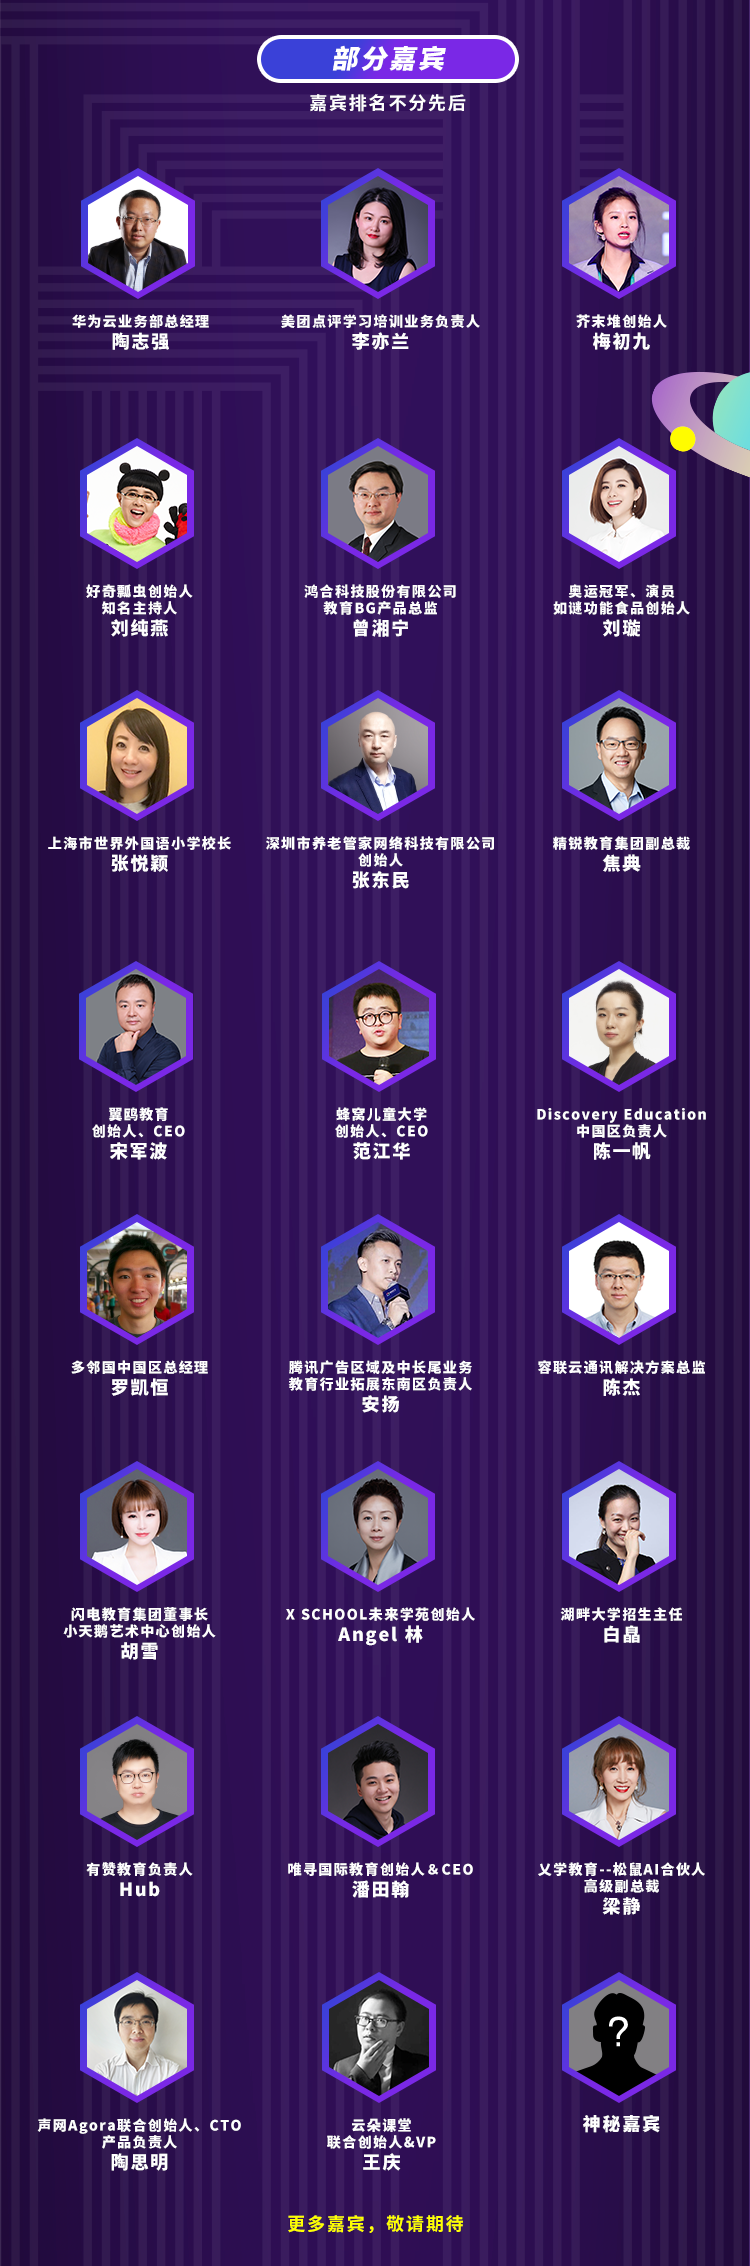 GET2019首届教育文化节 | 教育行业交流大会（上海）